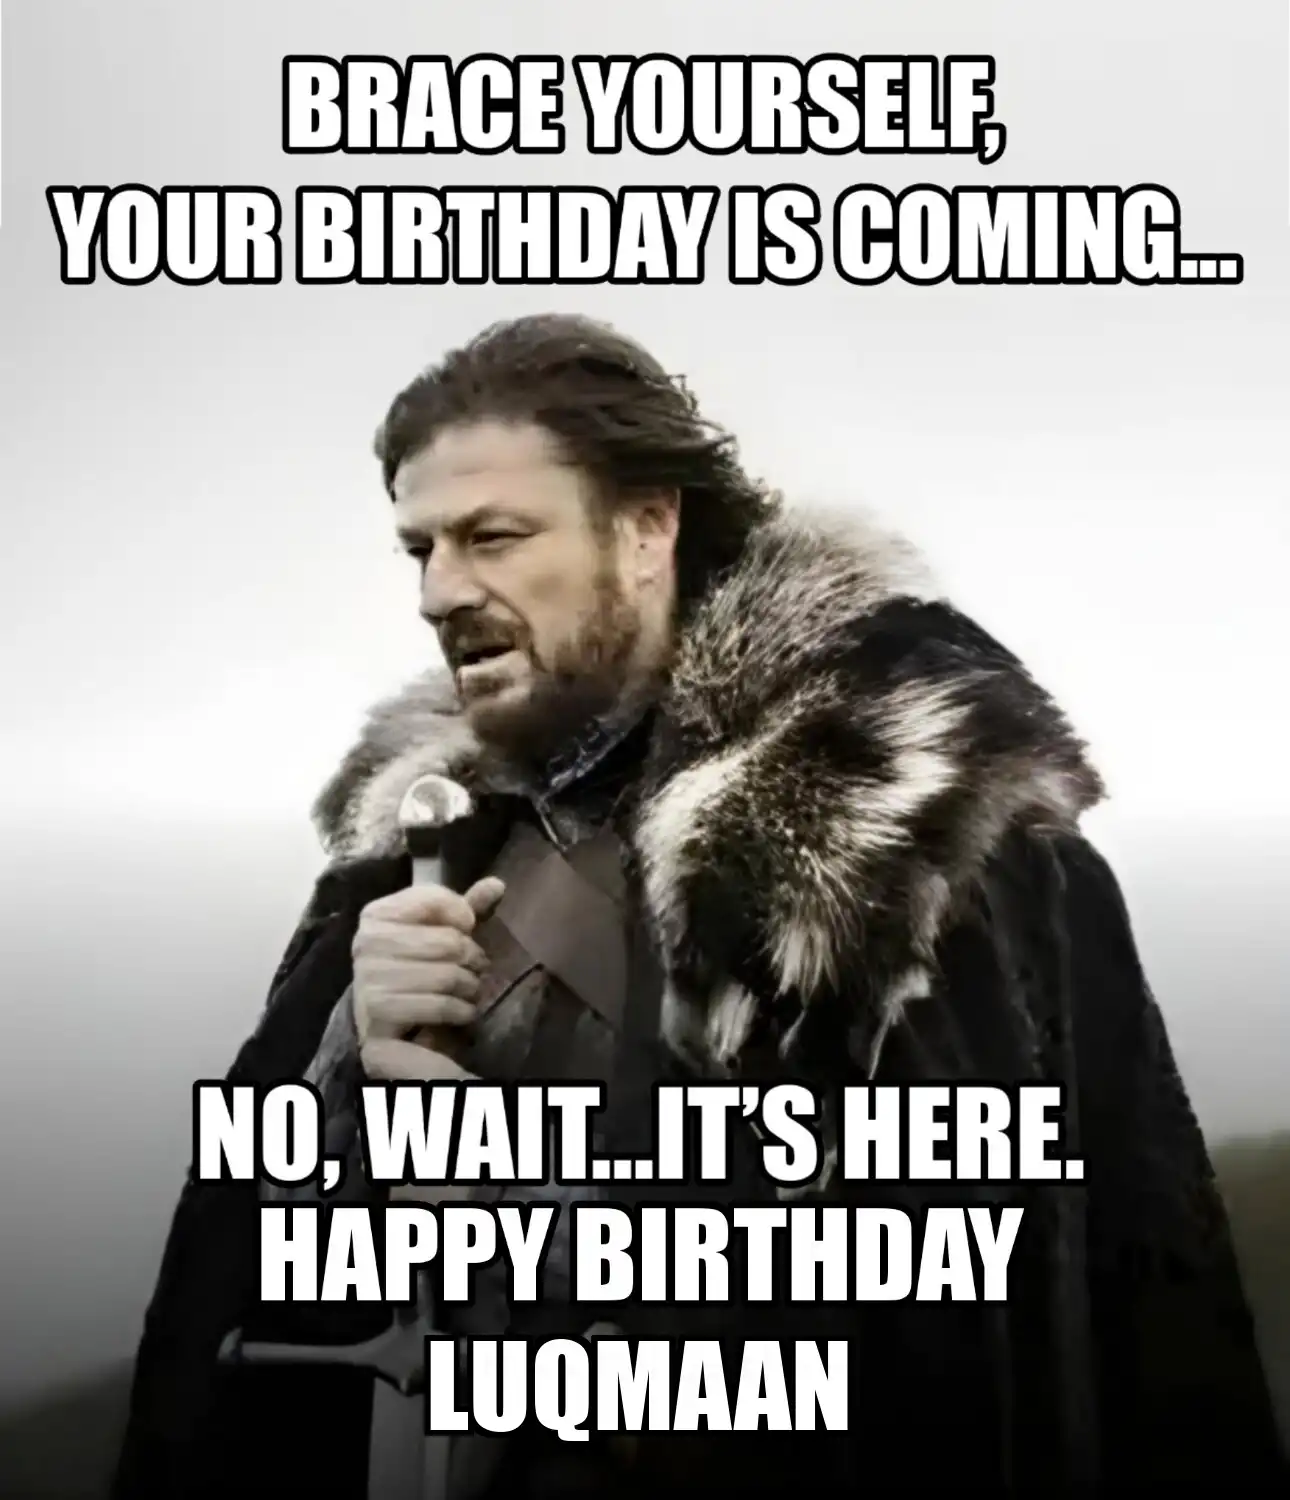 Happy Birthday Luqmaan Brace Yourself Your Birthday Is Coming Meme